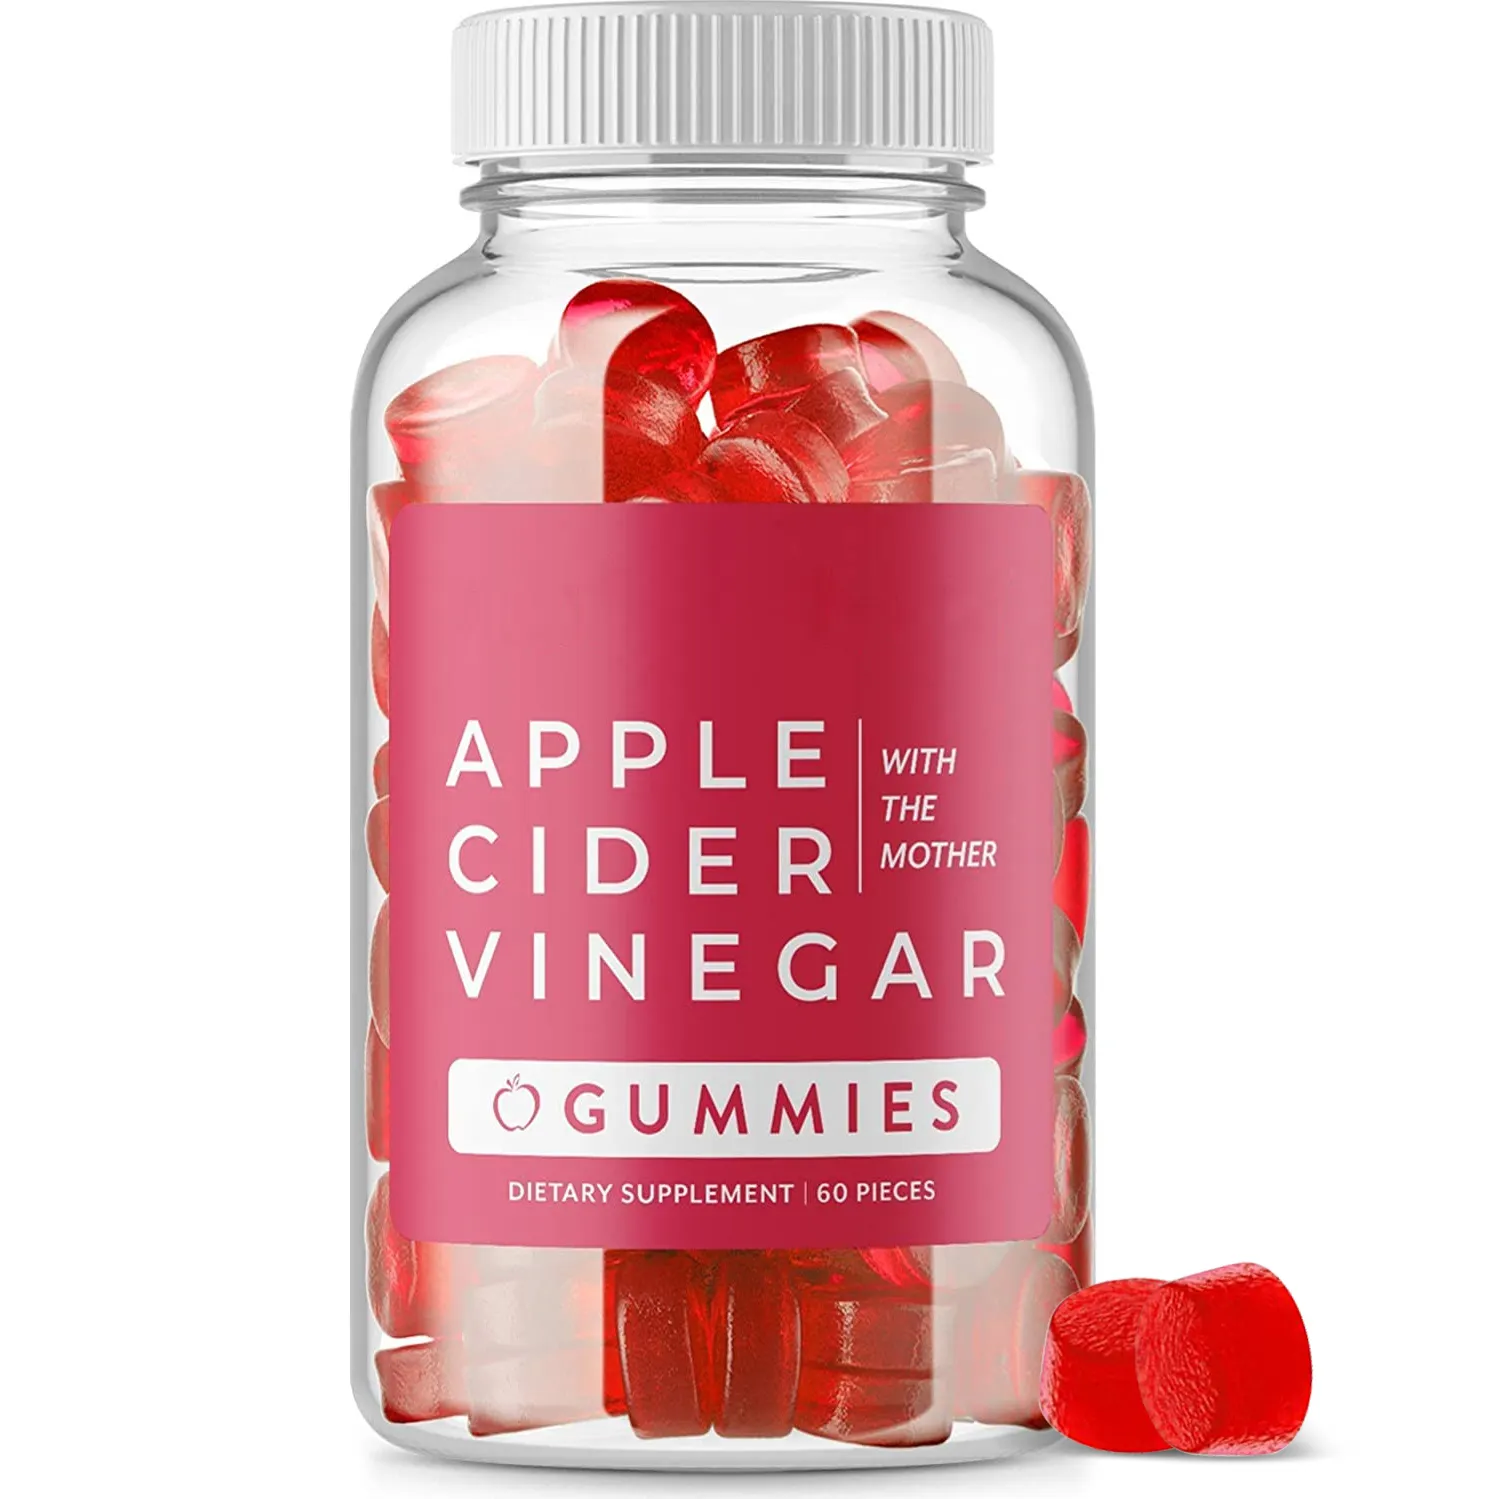 2021 Hot Sell Gummy Weight Loss, Detox, & Cleanse Apple Cider Vinegar Gummies